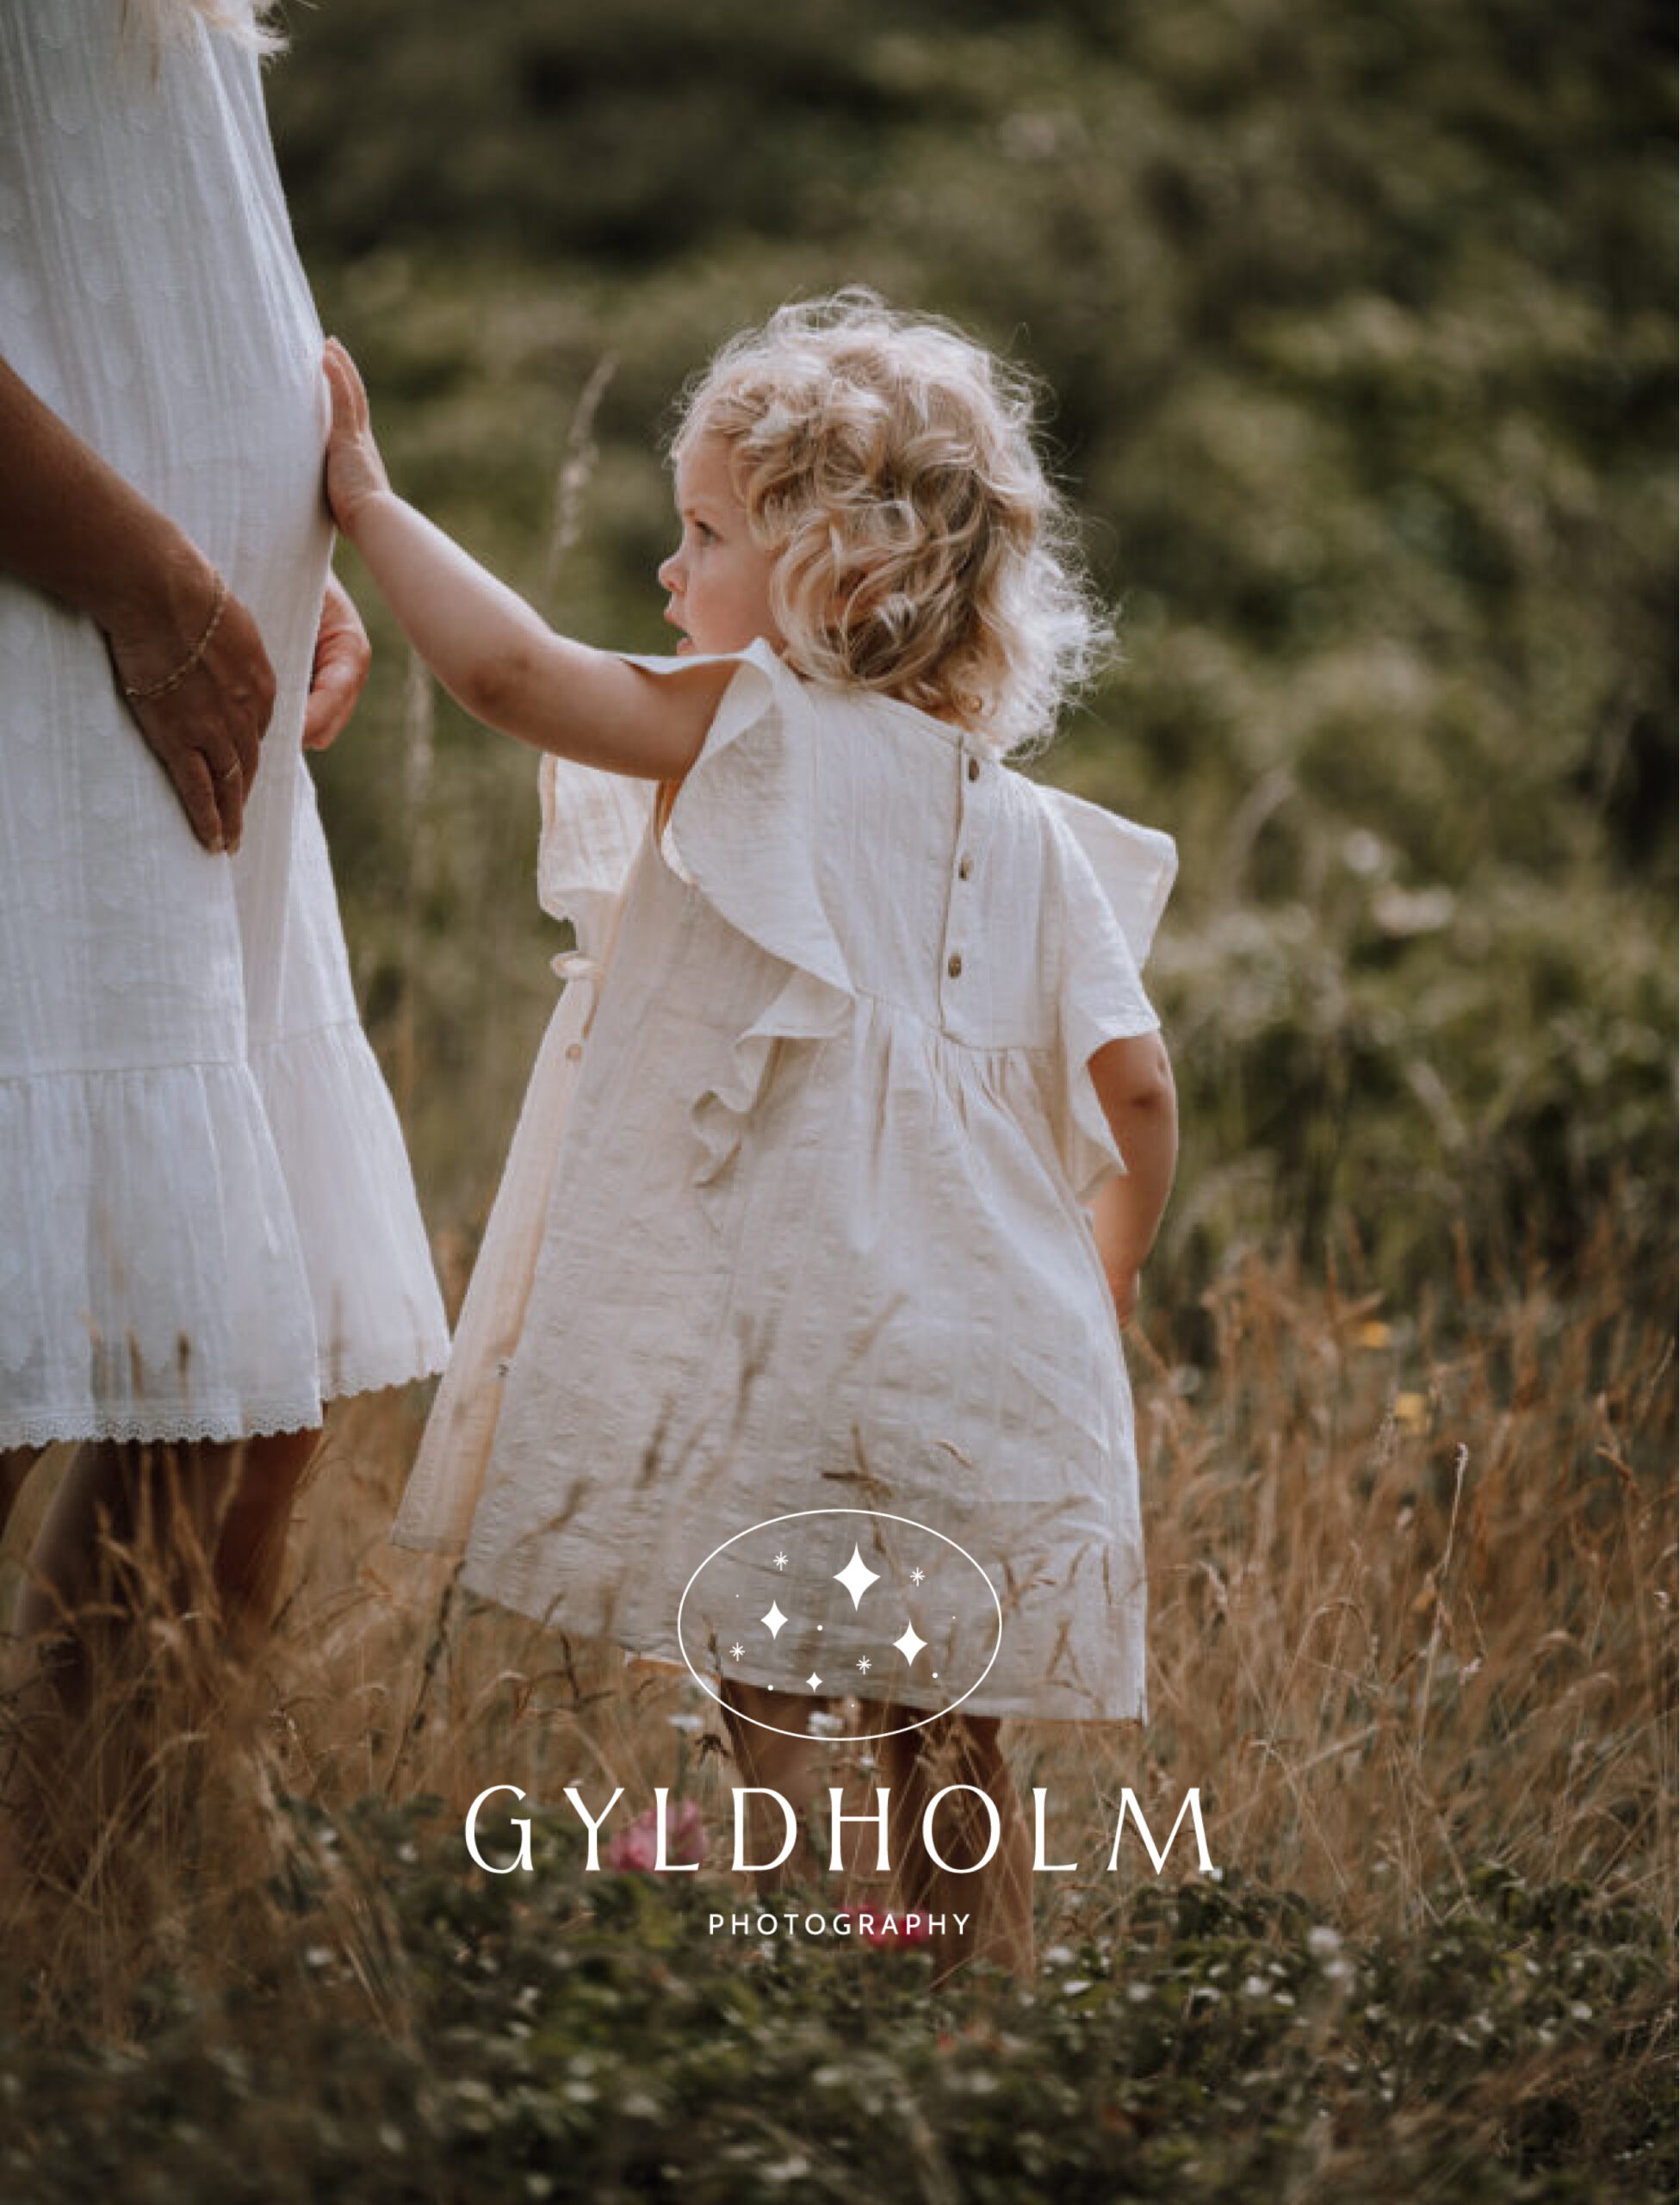 Gyldholm Photography